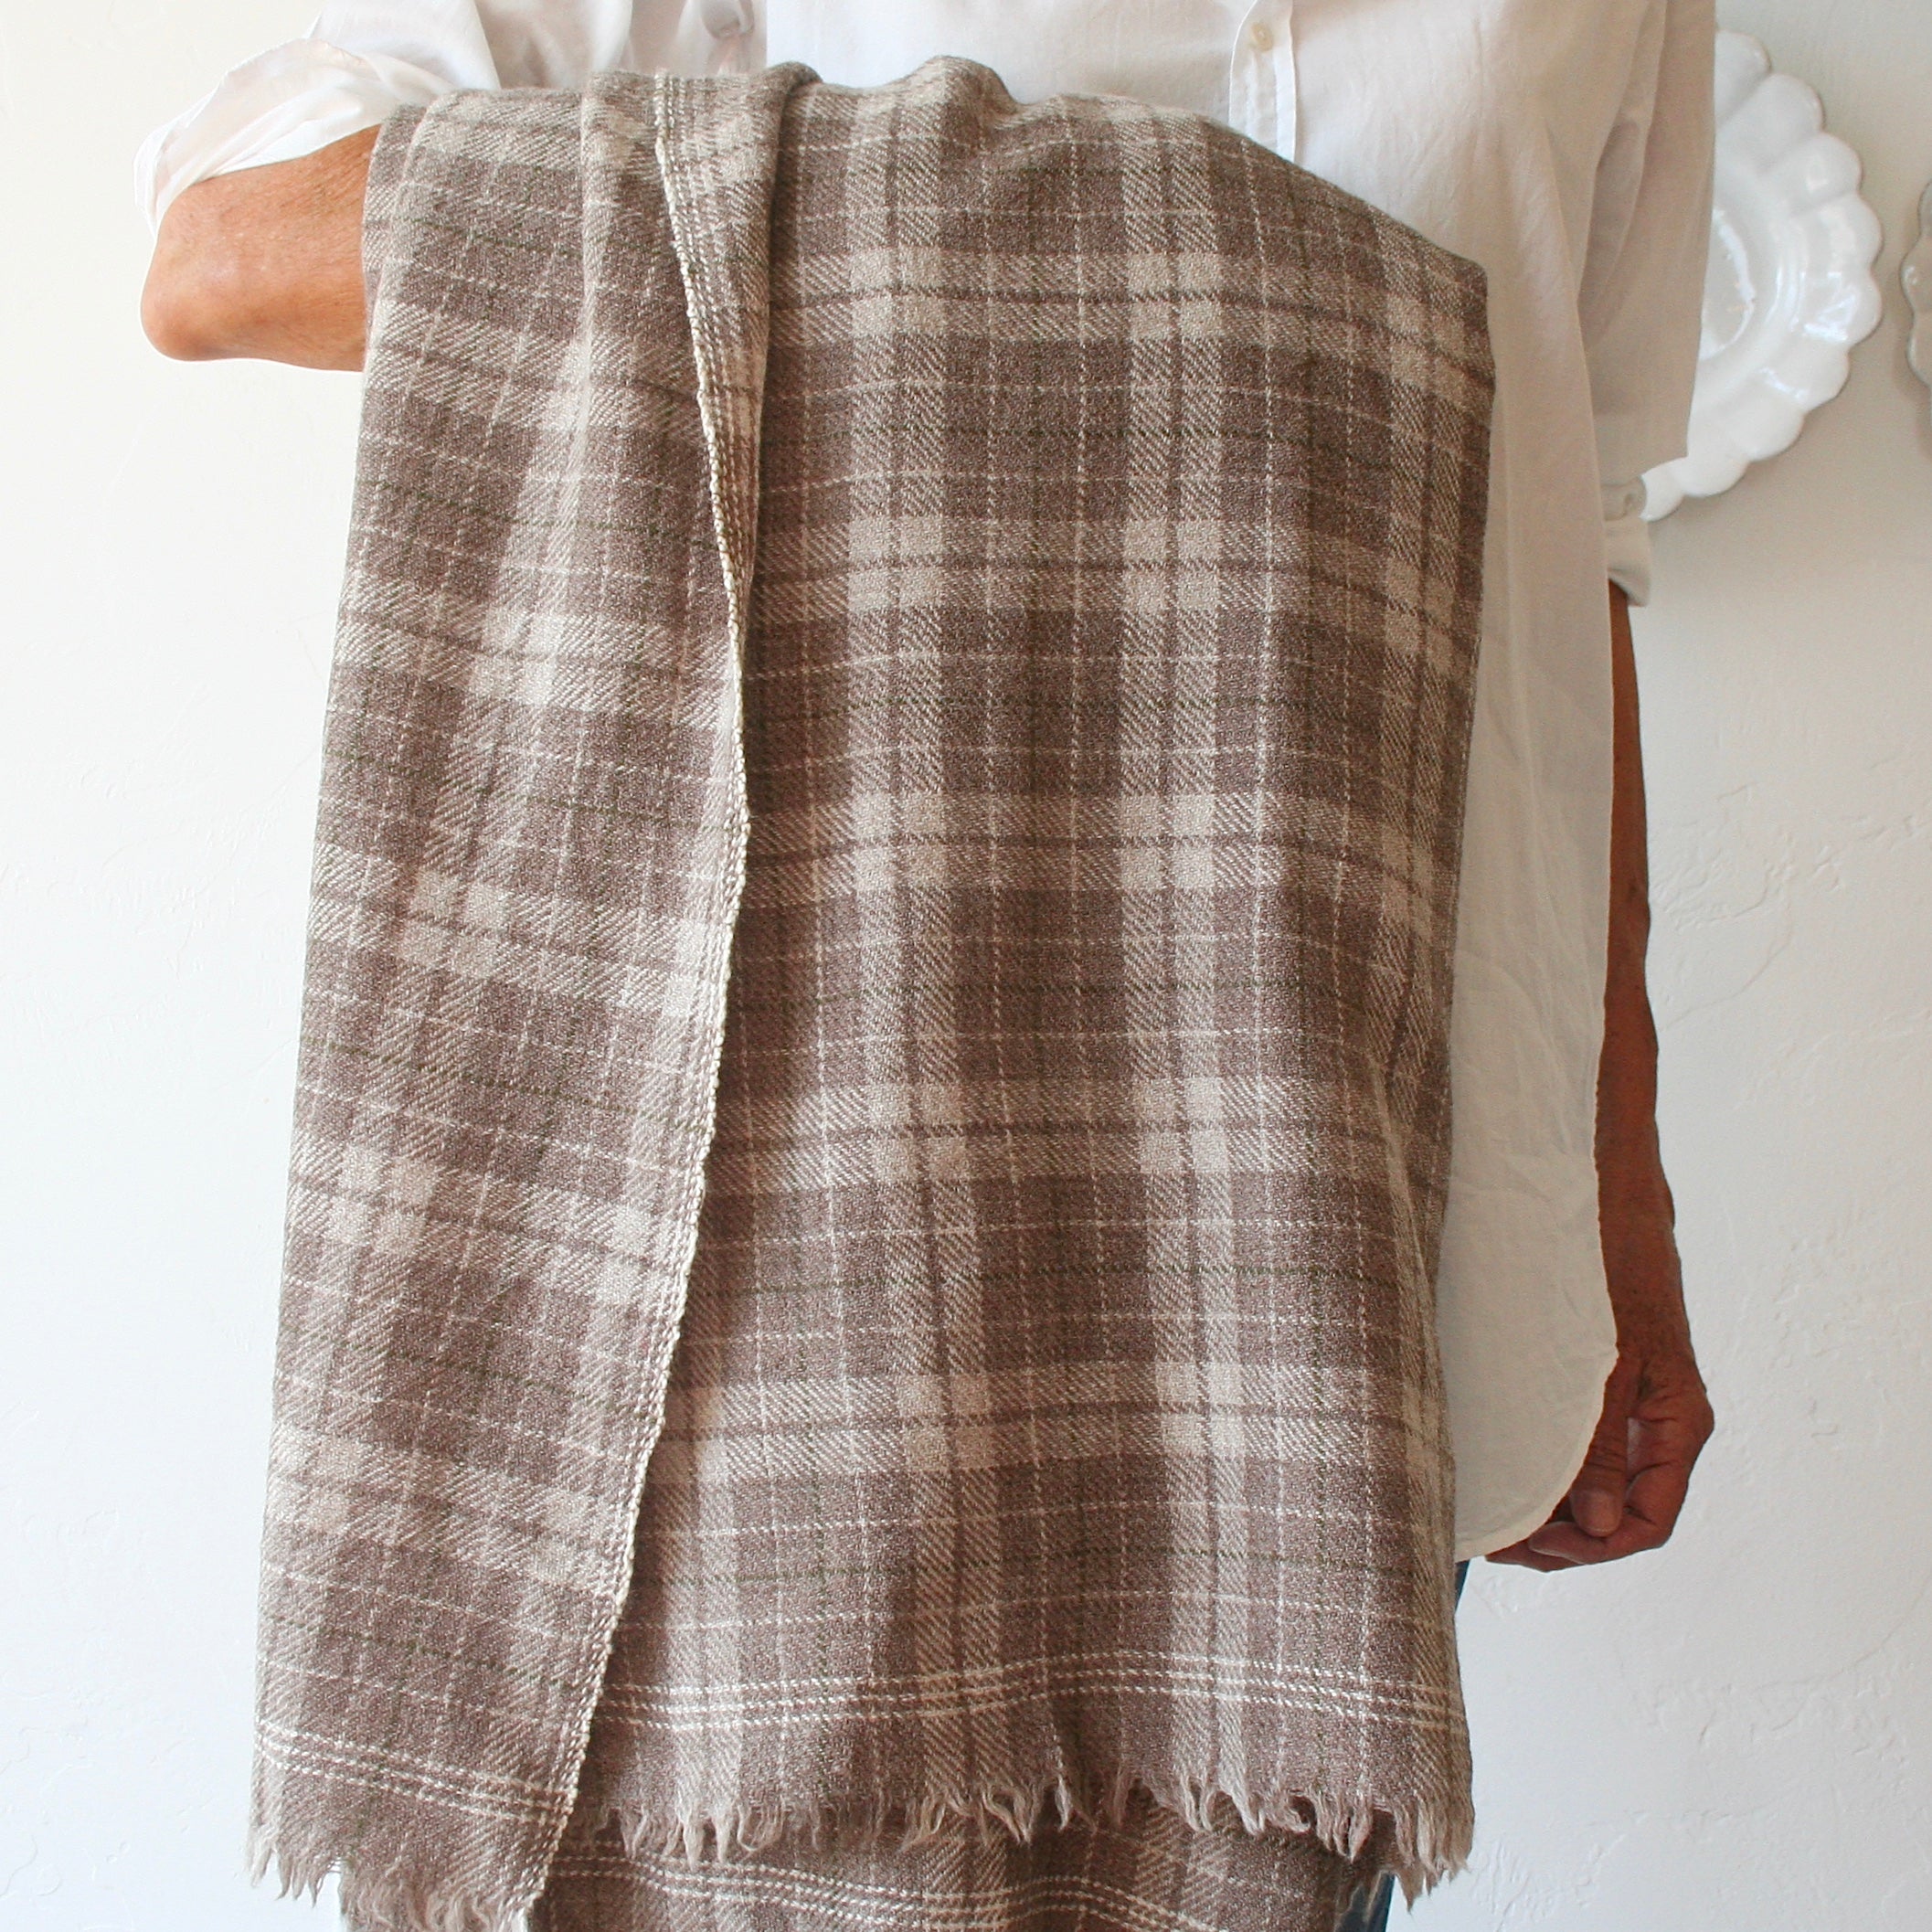 Moismont Wool Plaid Blanket - Natural